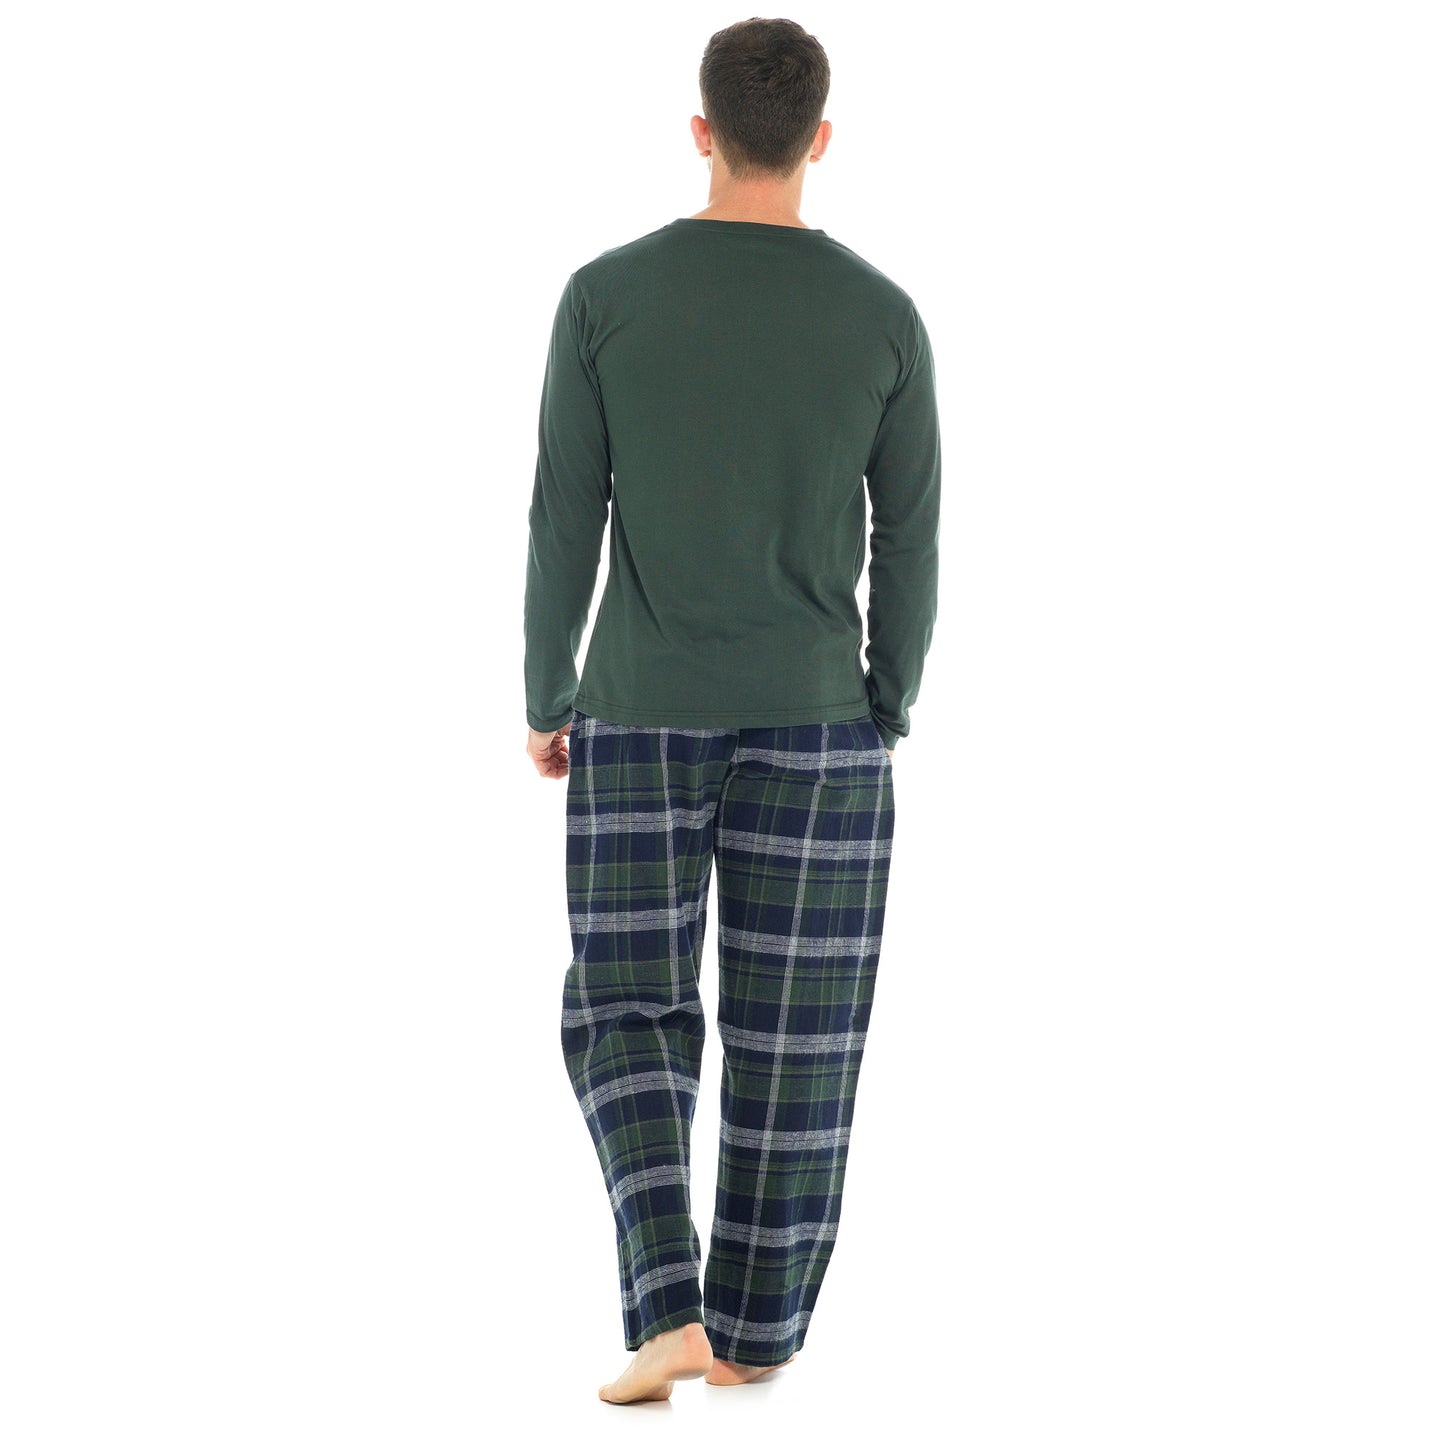 Mens Cotton Pyjamas Set Long Sleeved Green Top and Green/Navy Checked Long Pants Loungewear